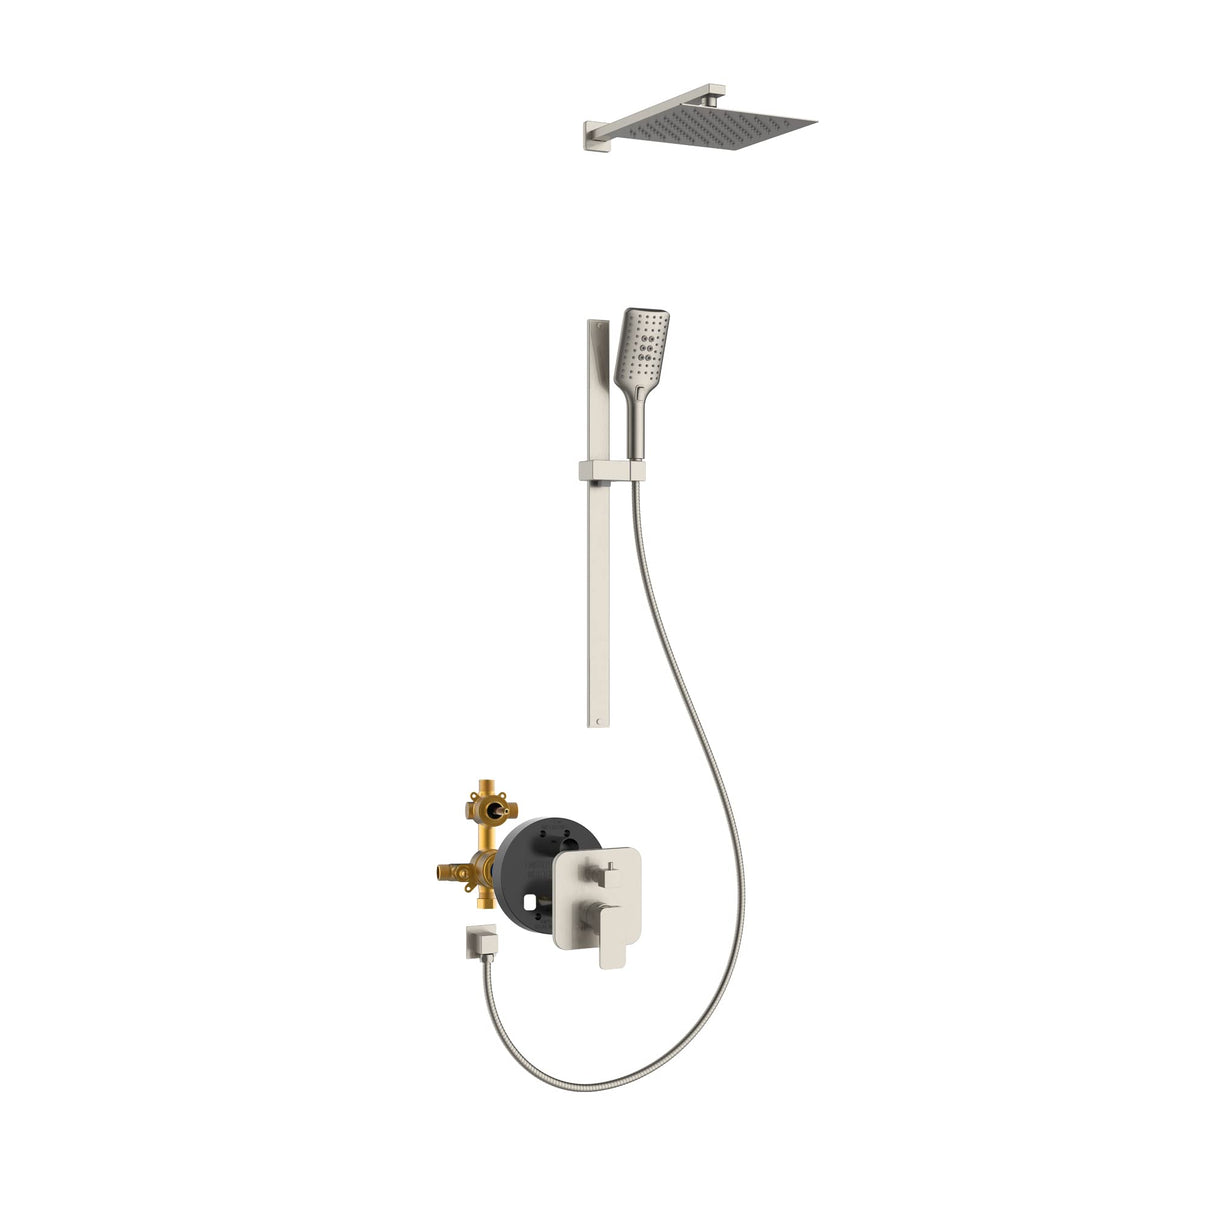 PULSE ShowerSpas 3008-BN Combo Shower System in Brushed-Nickel